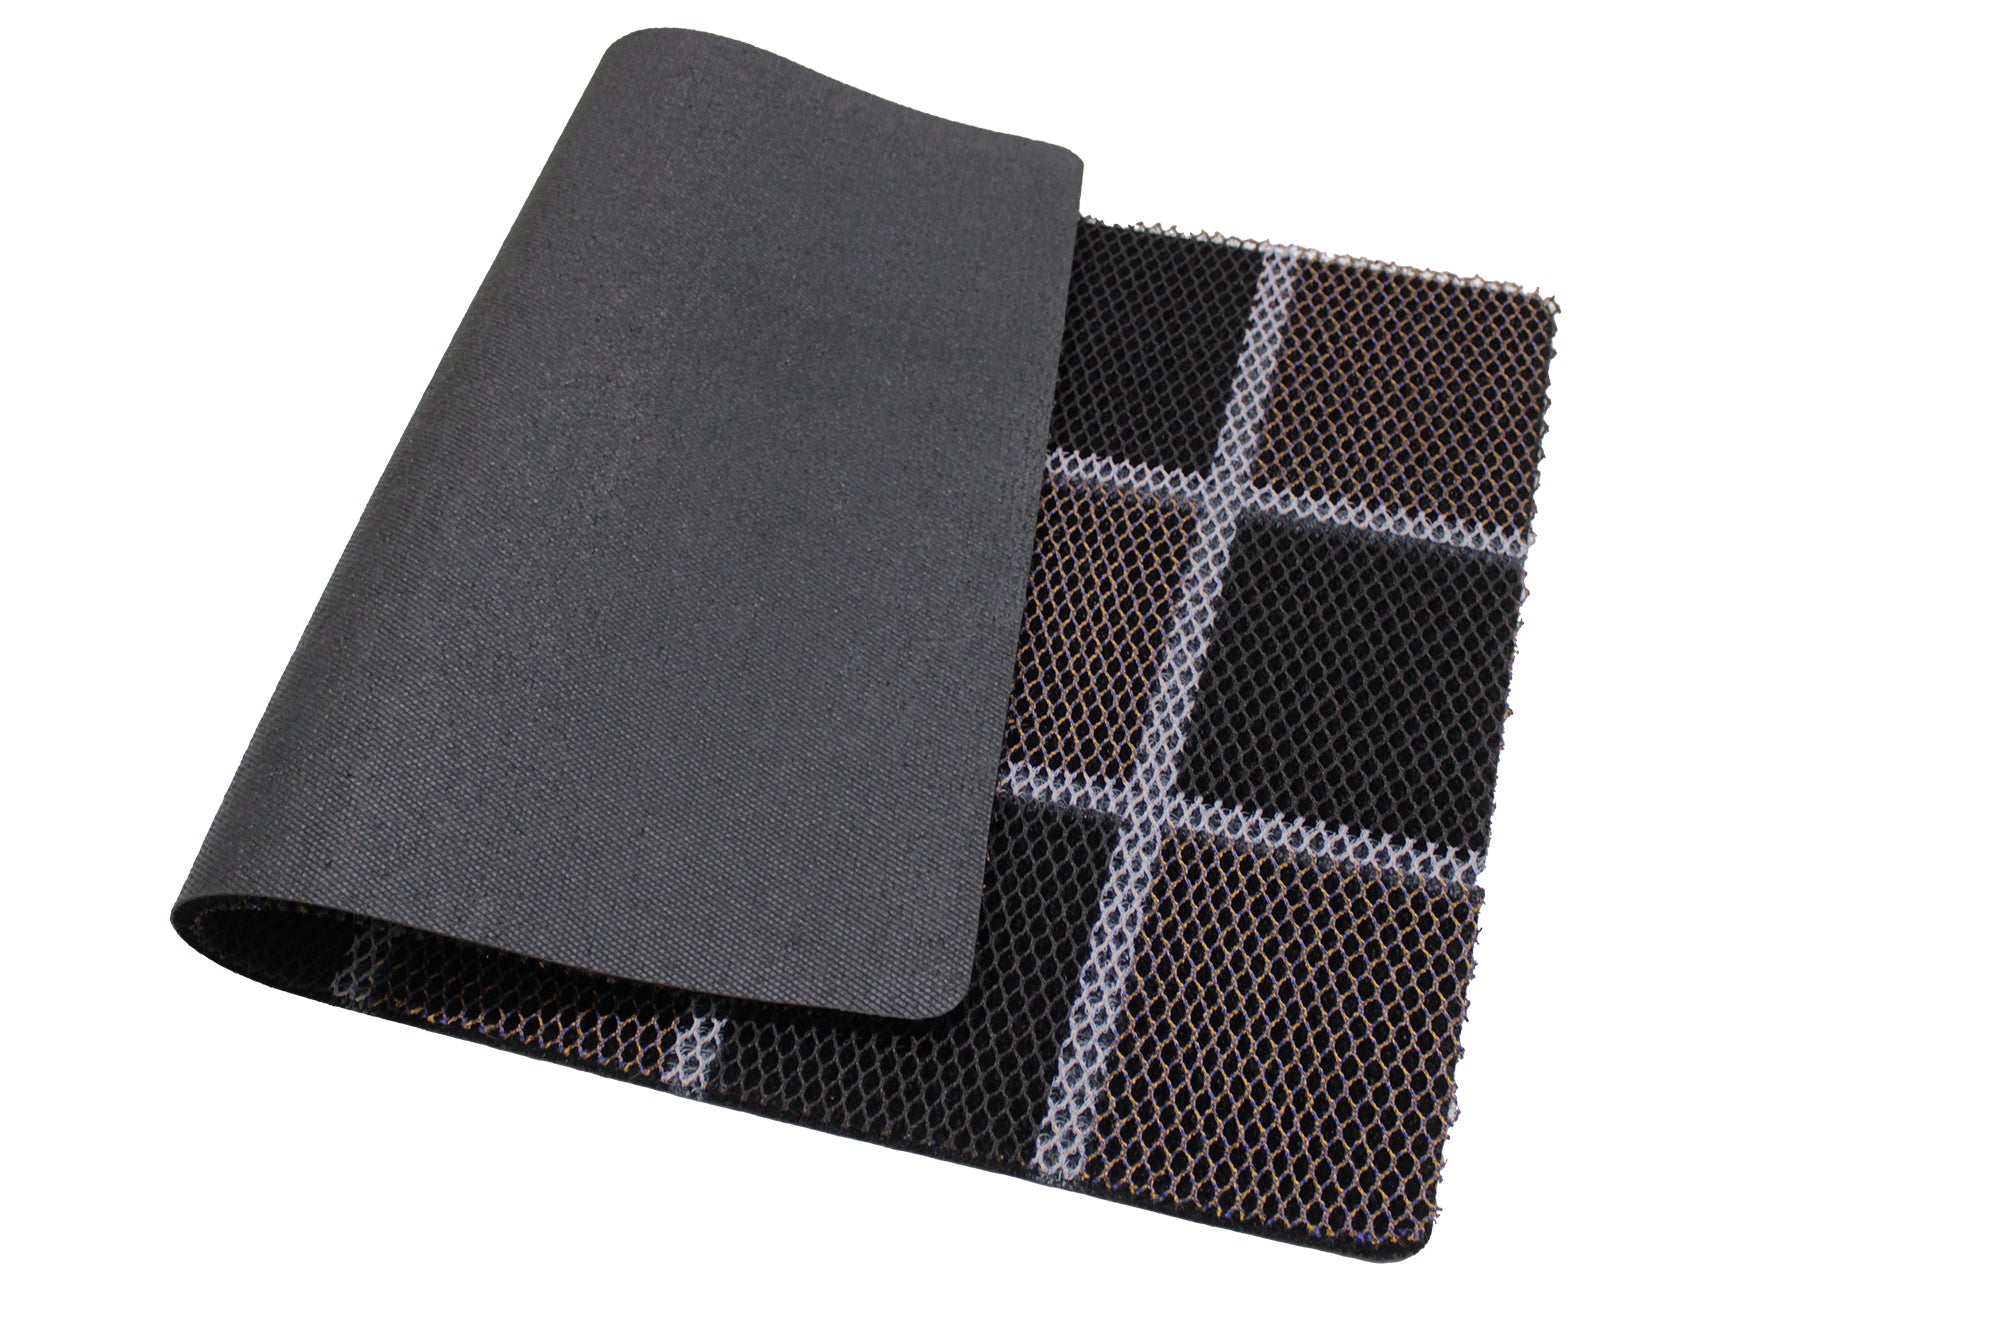 75cmx44cm Water Resistant Abrasive Fiber Checkered Floor Mat